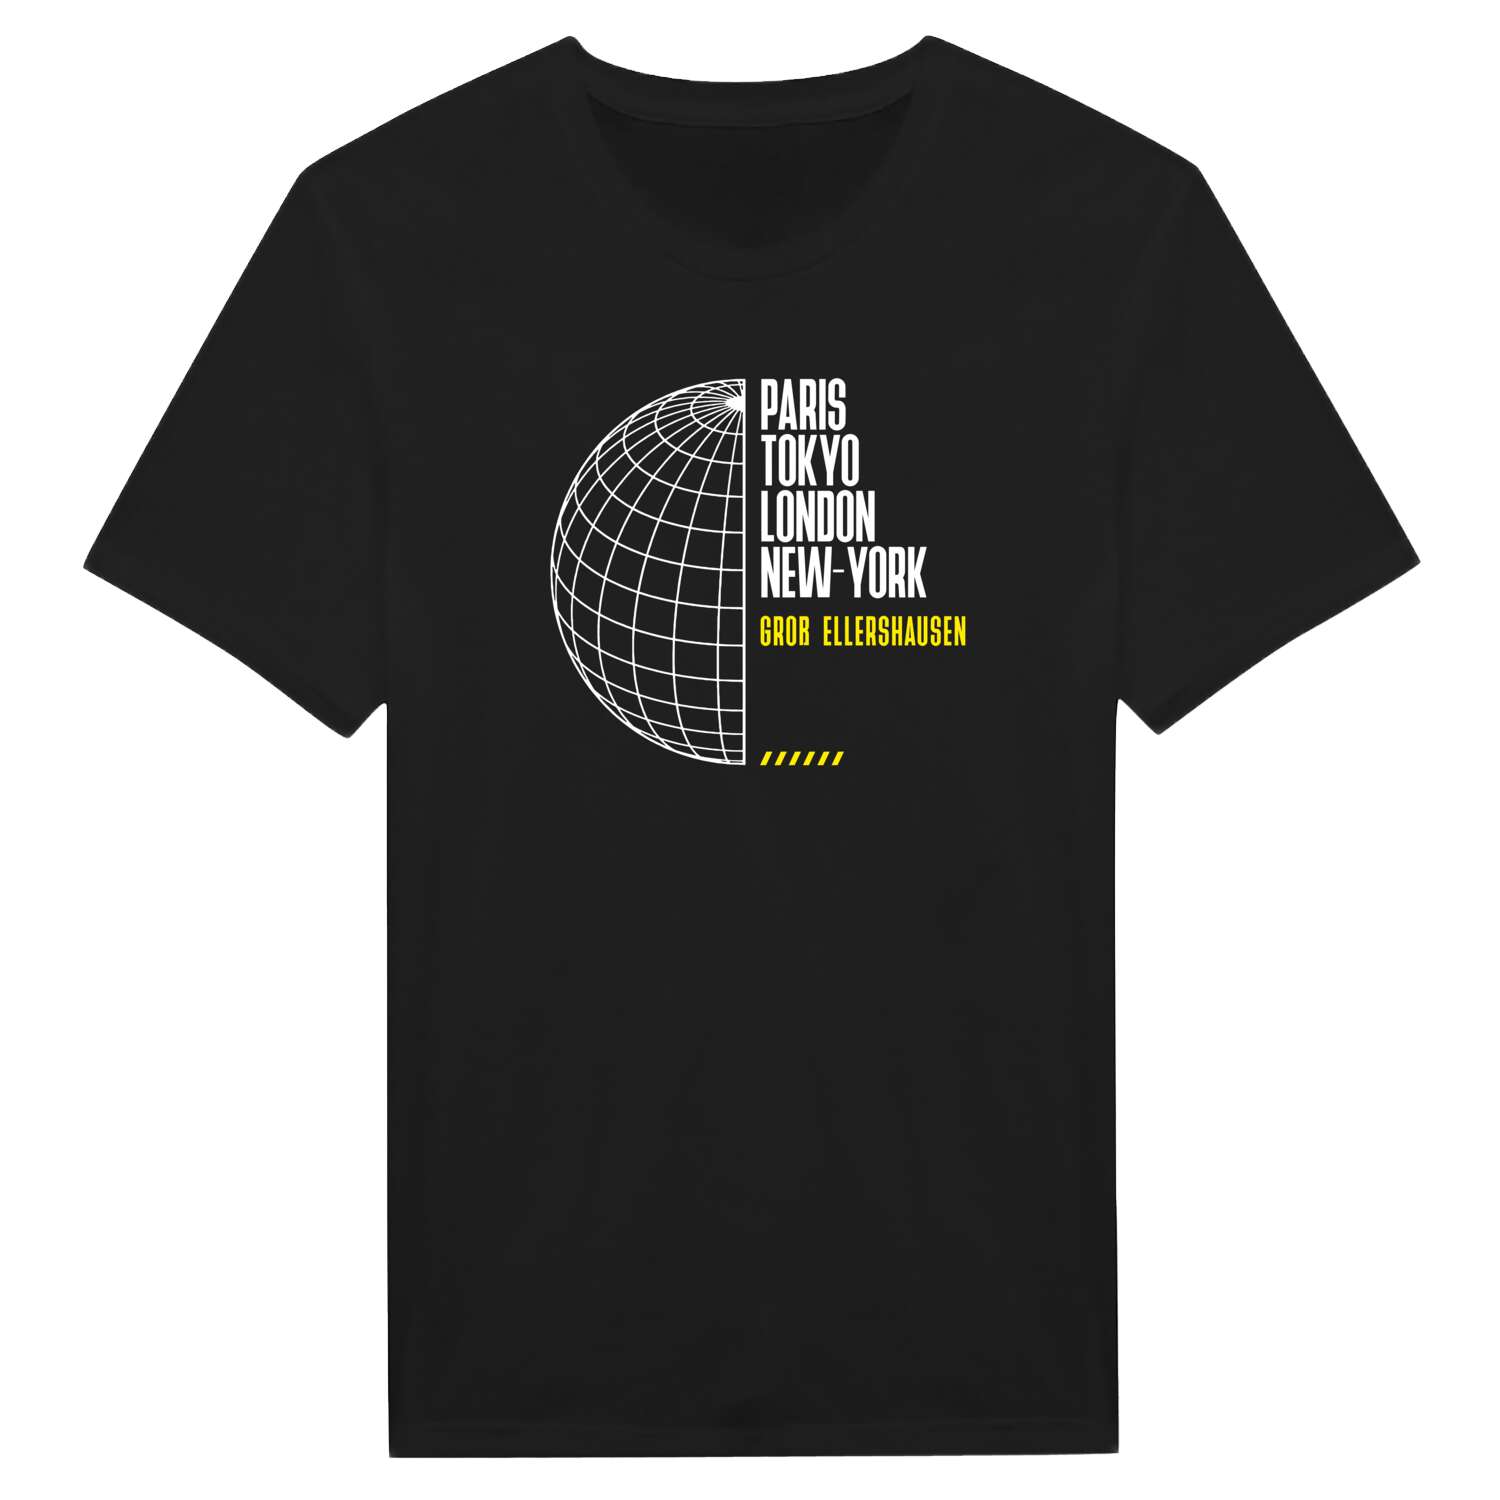 Groß Ellershausen T-Shirt »Paris Tokyo London«